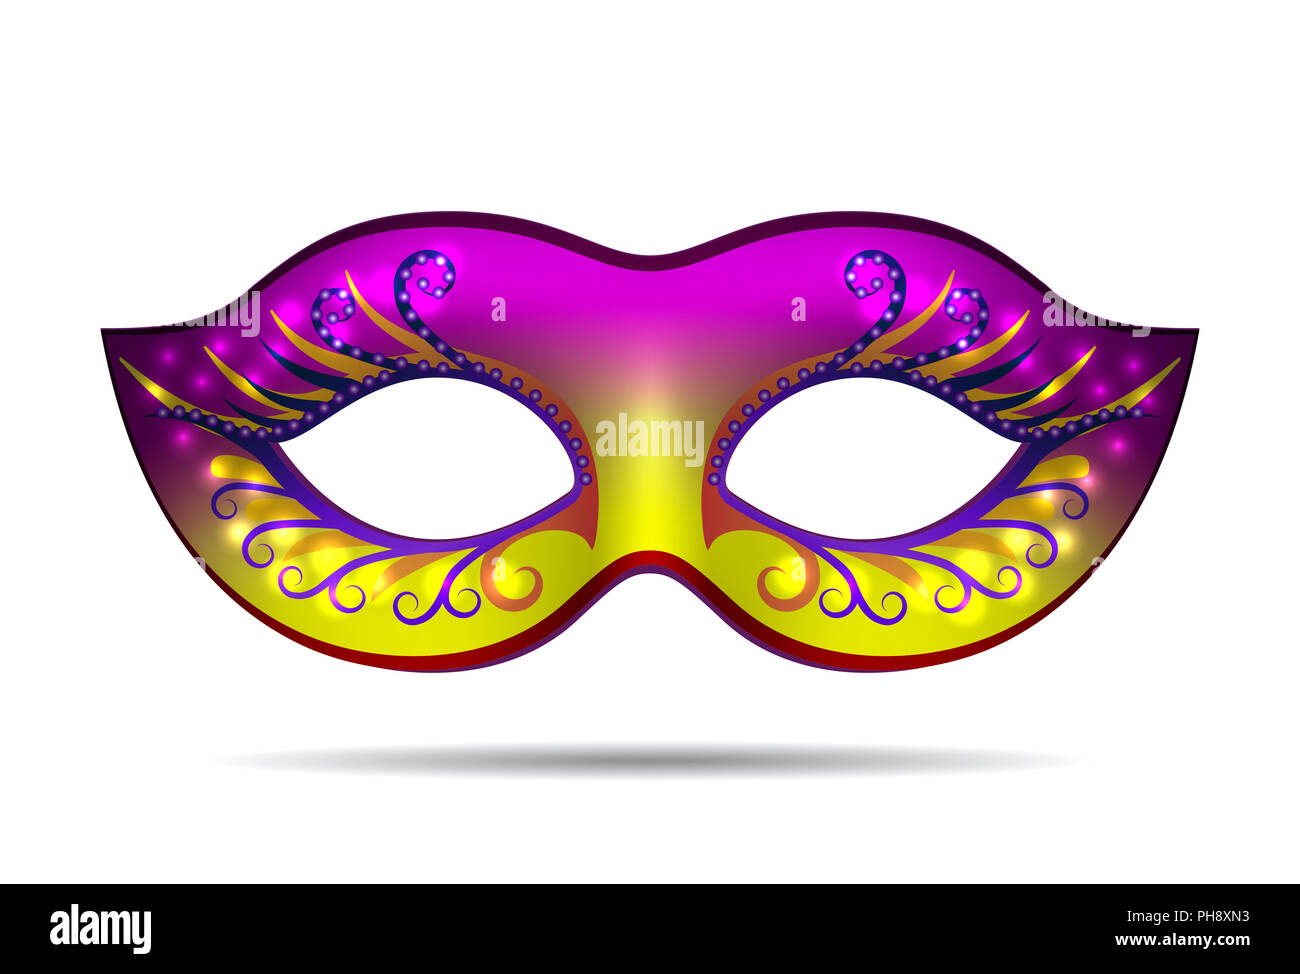 Carnival mask for masquerade costume. Stock Photo